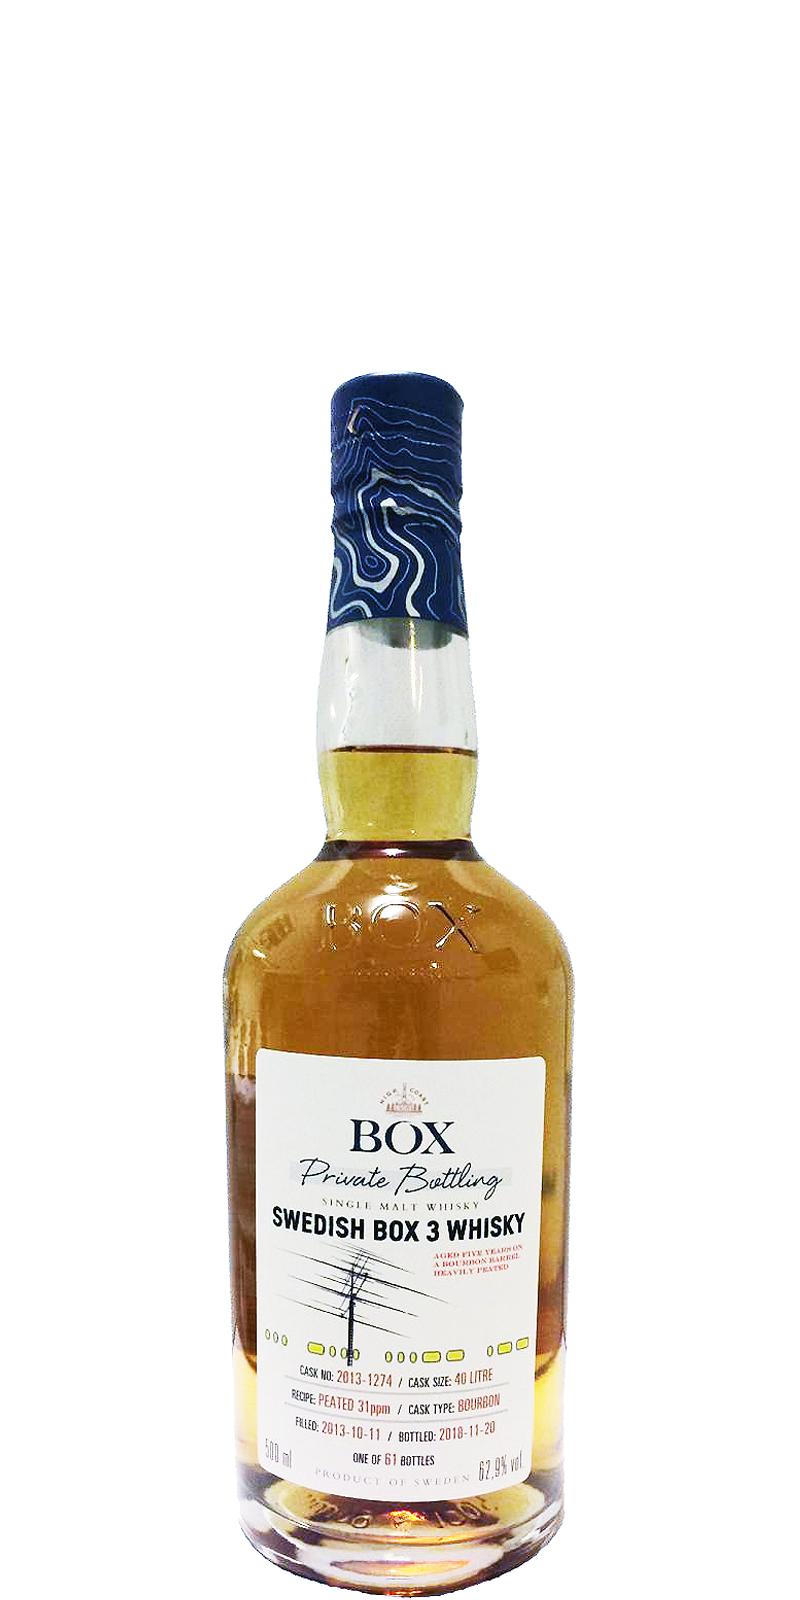 Box 2013 Swedish Box 3 Whisky Private Bottling 40L Bourbon 2013-1274 Dog Bitch Lake Contest Group & Friends 62.9% 500ml